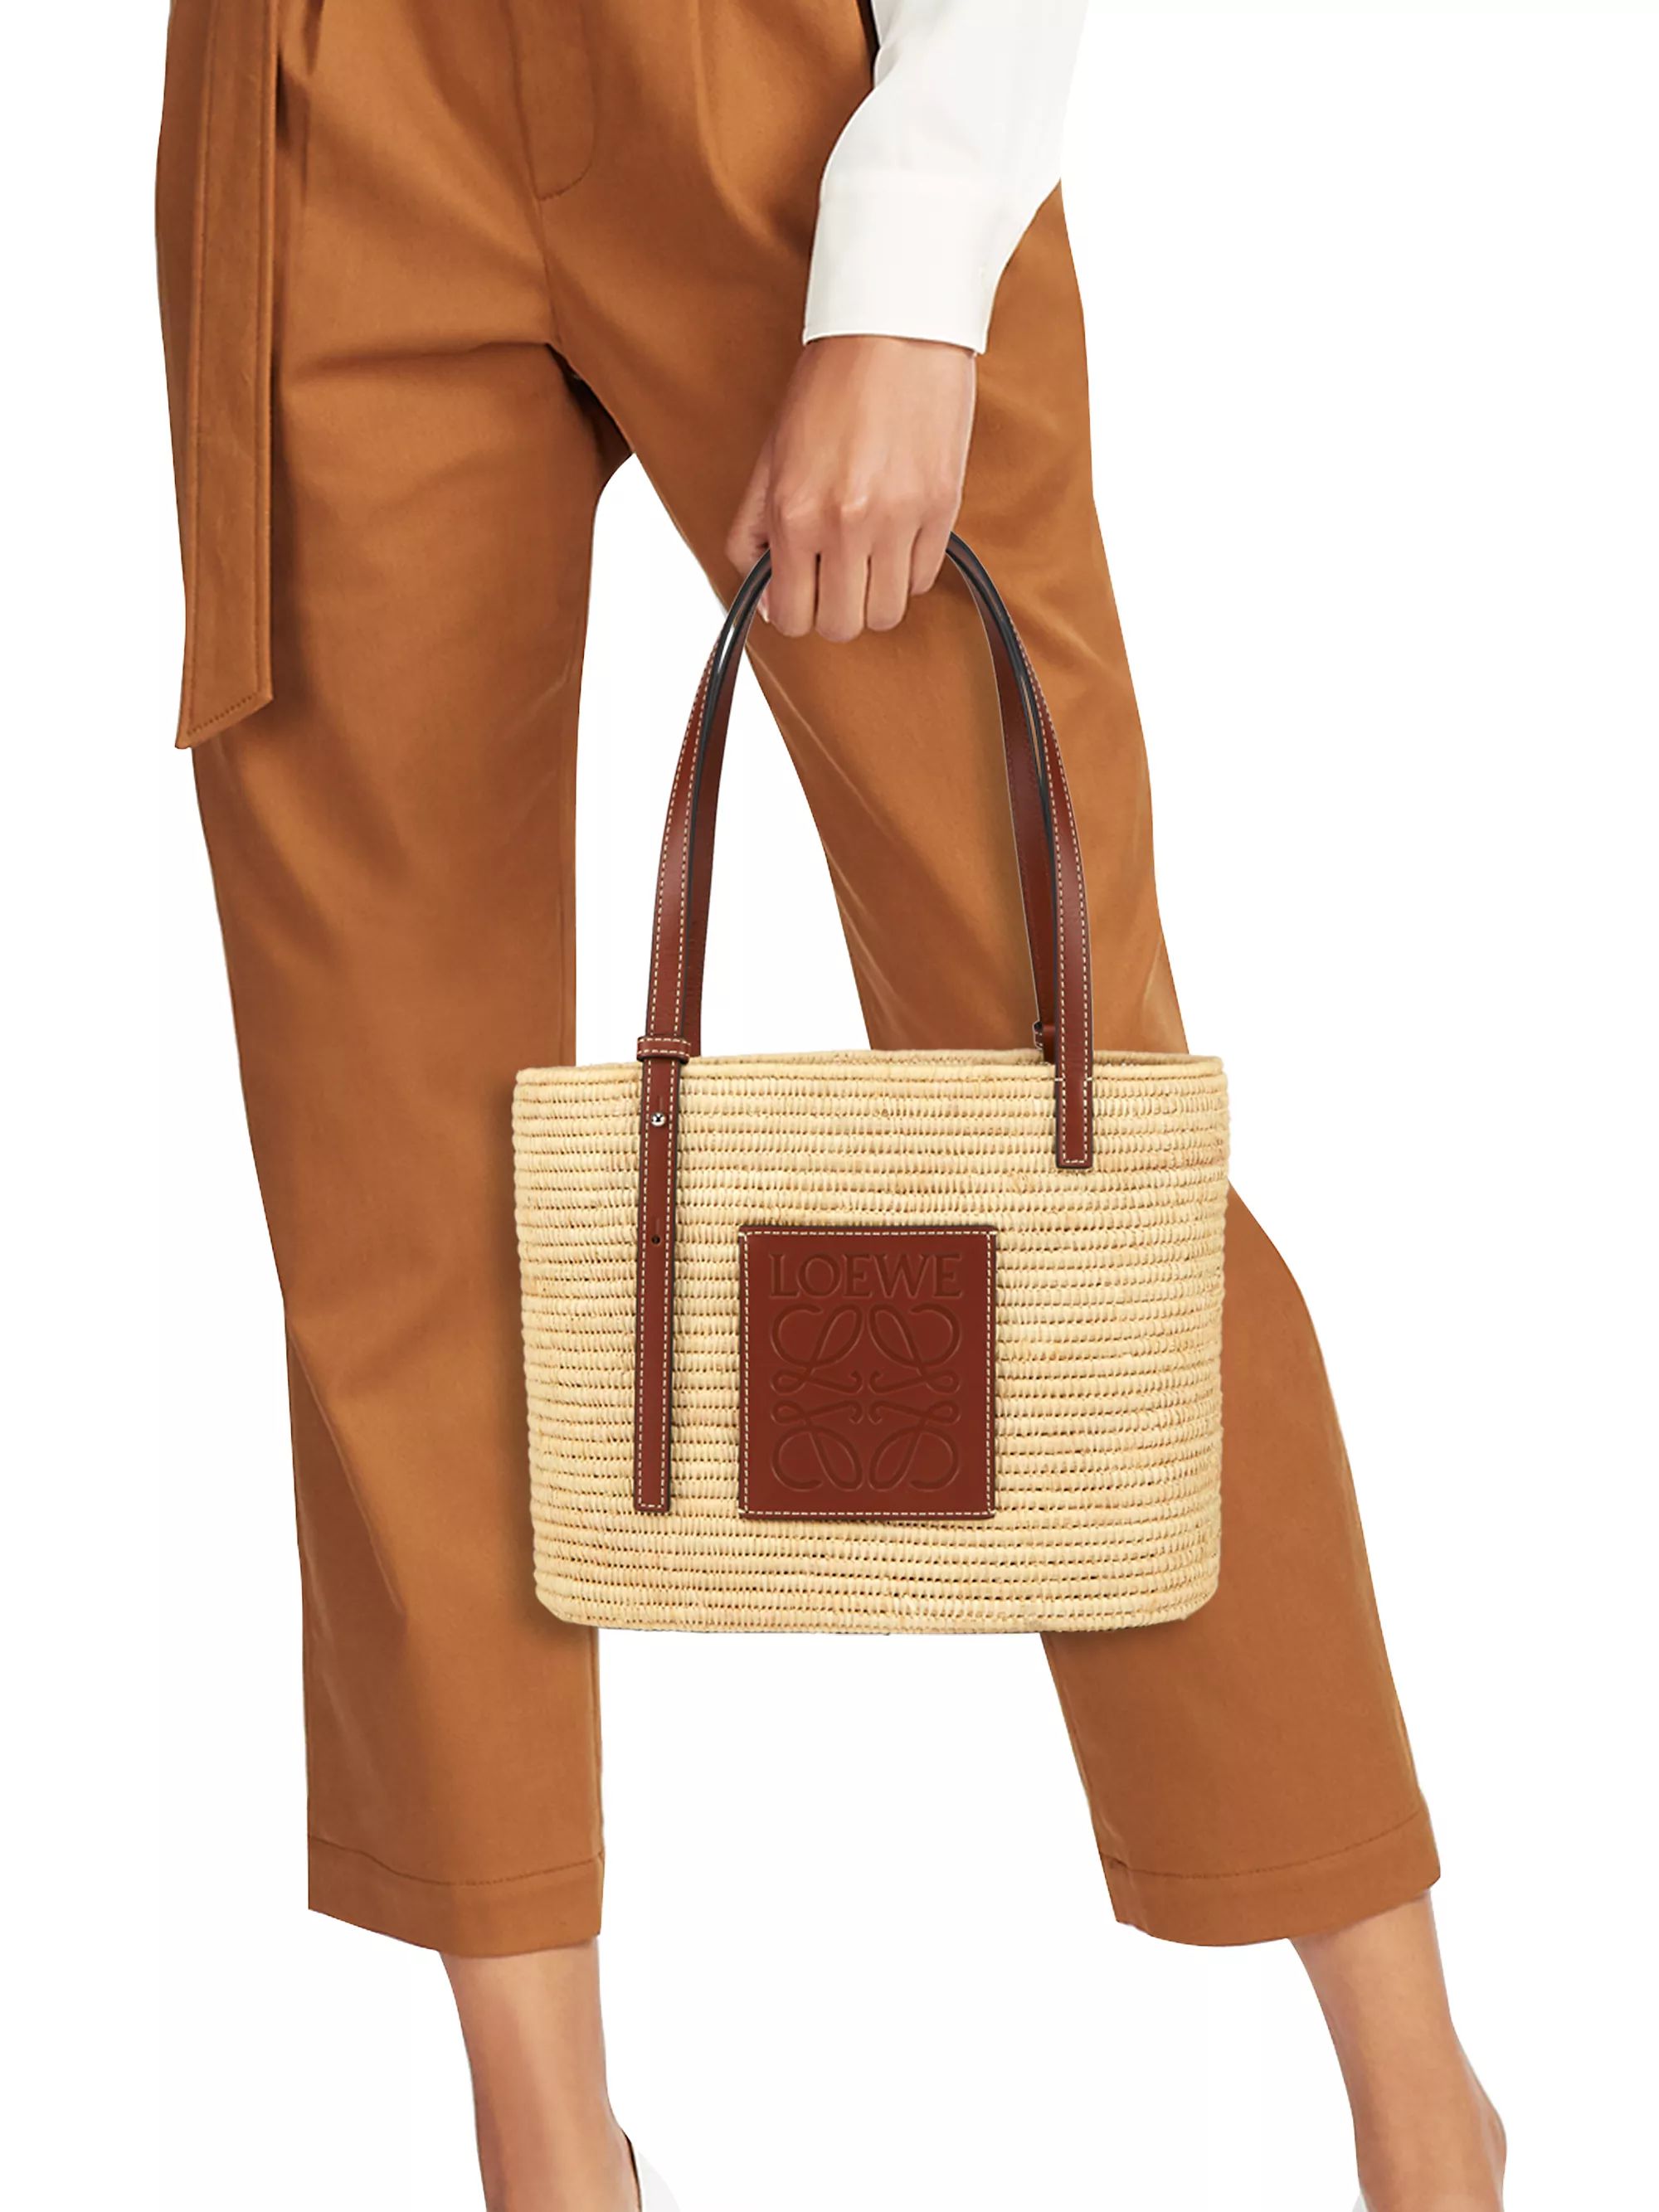 Shop By CategoryTotesLOEWESmall Square Leather-Trimmed Raffia Basket Bag$790
            
       ... | Saks Fifth Avenue